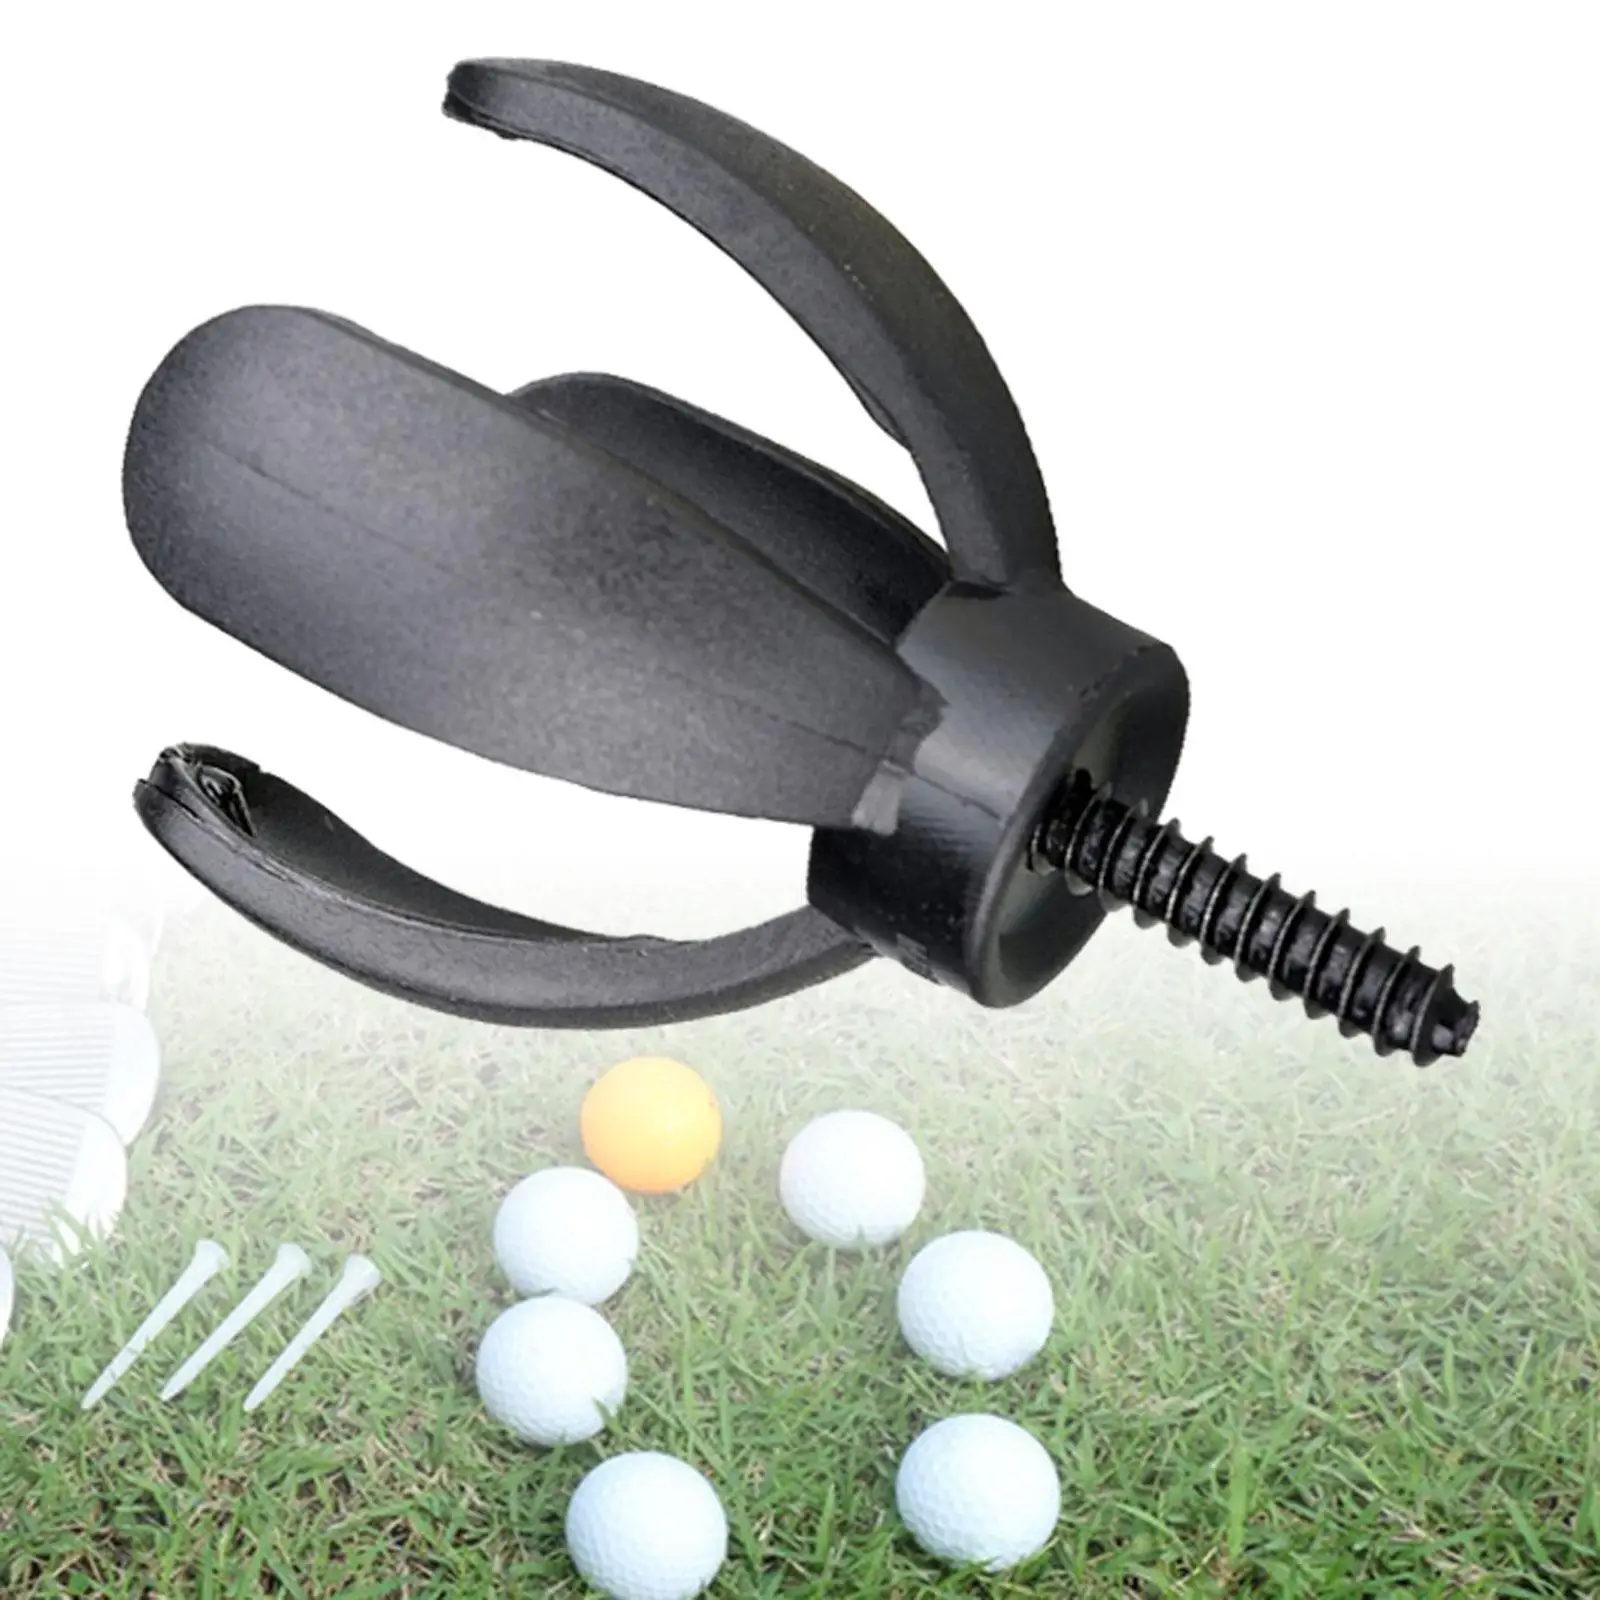 4 Prong Golf Ball Pick Up Retriever Grabbers Claw Sucker Tool for Putter Grip